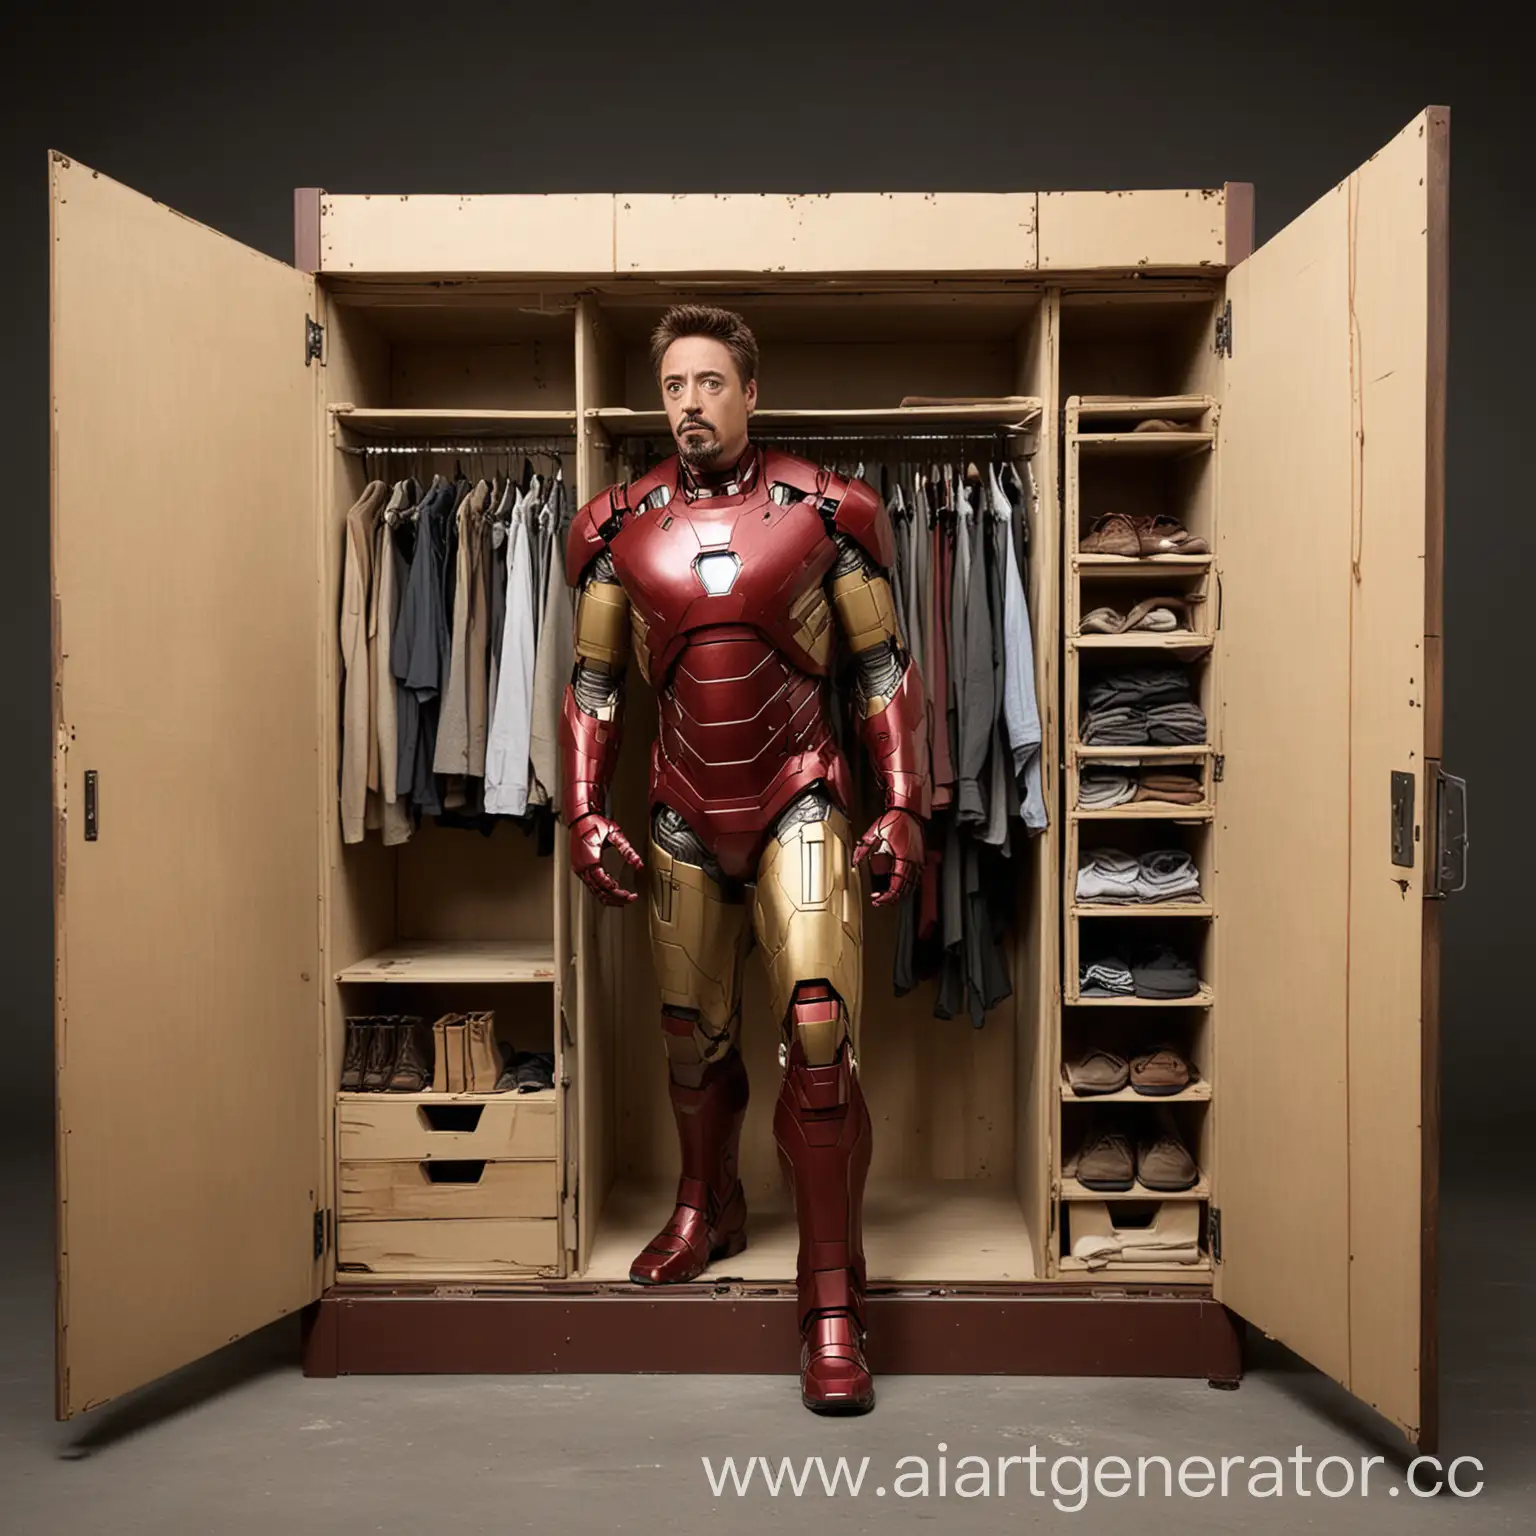 Robert-Downey-Jr-Constructs-Iron-Man-Suit-Wardrobe